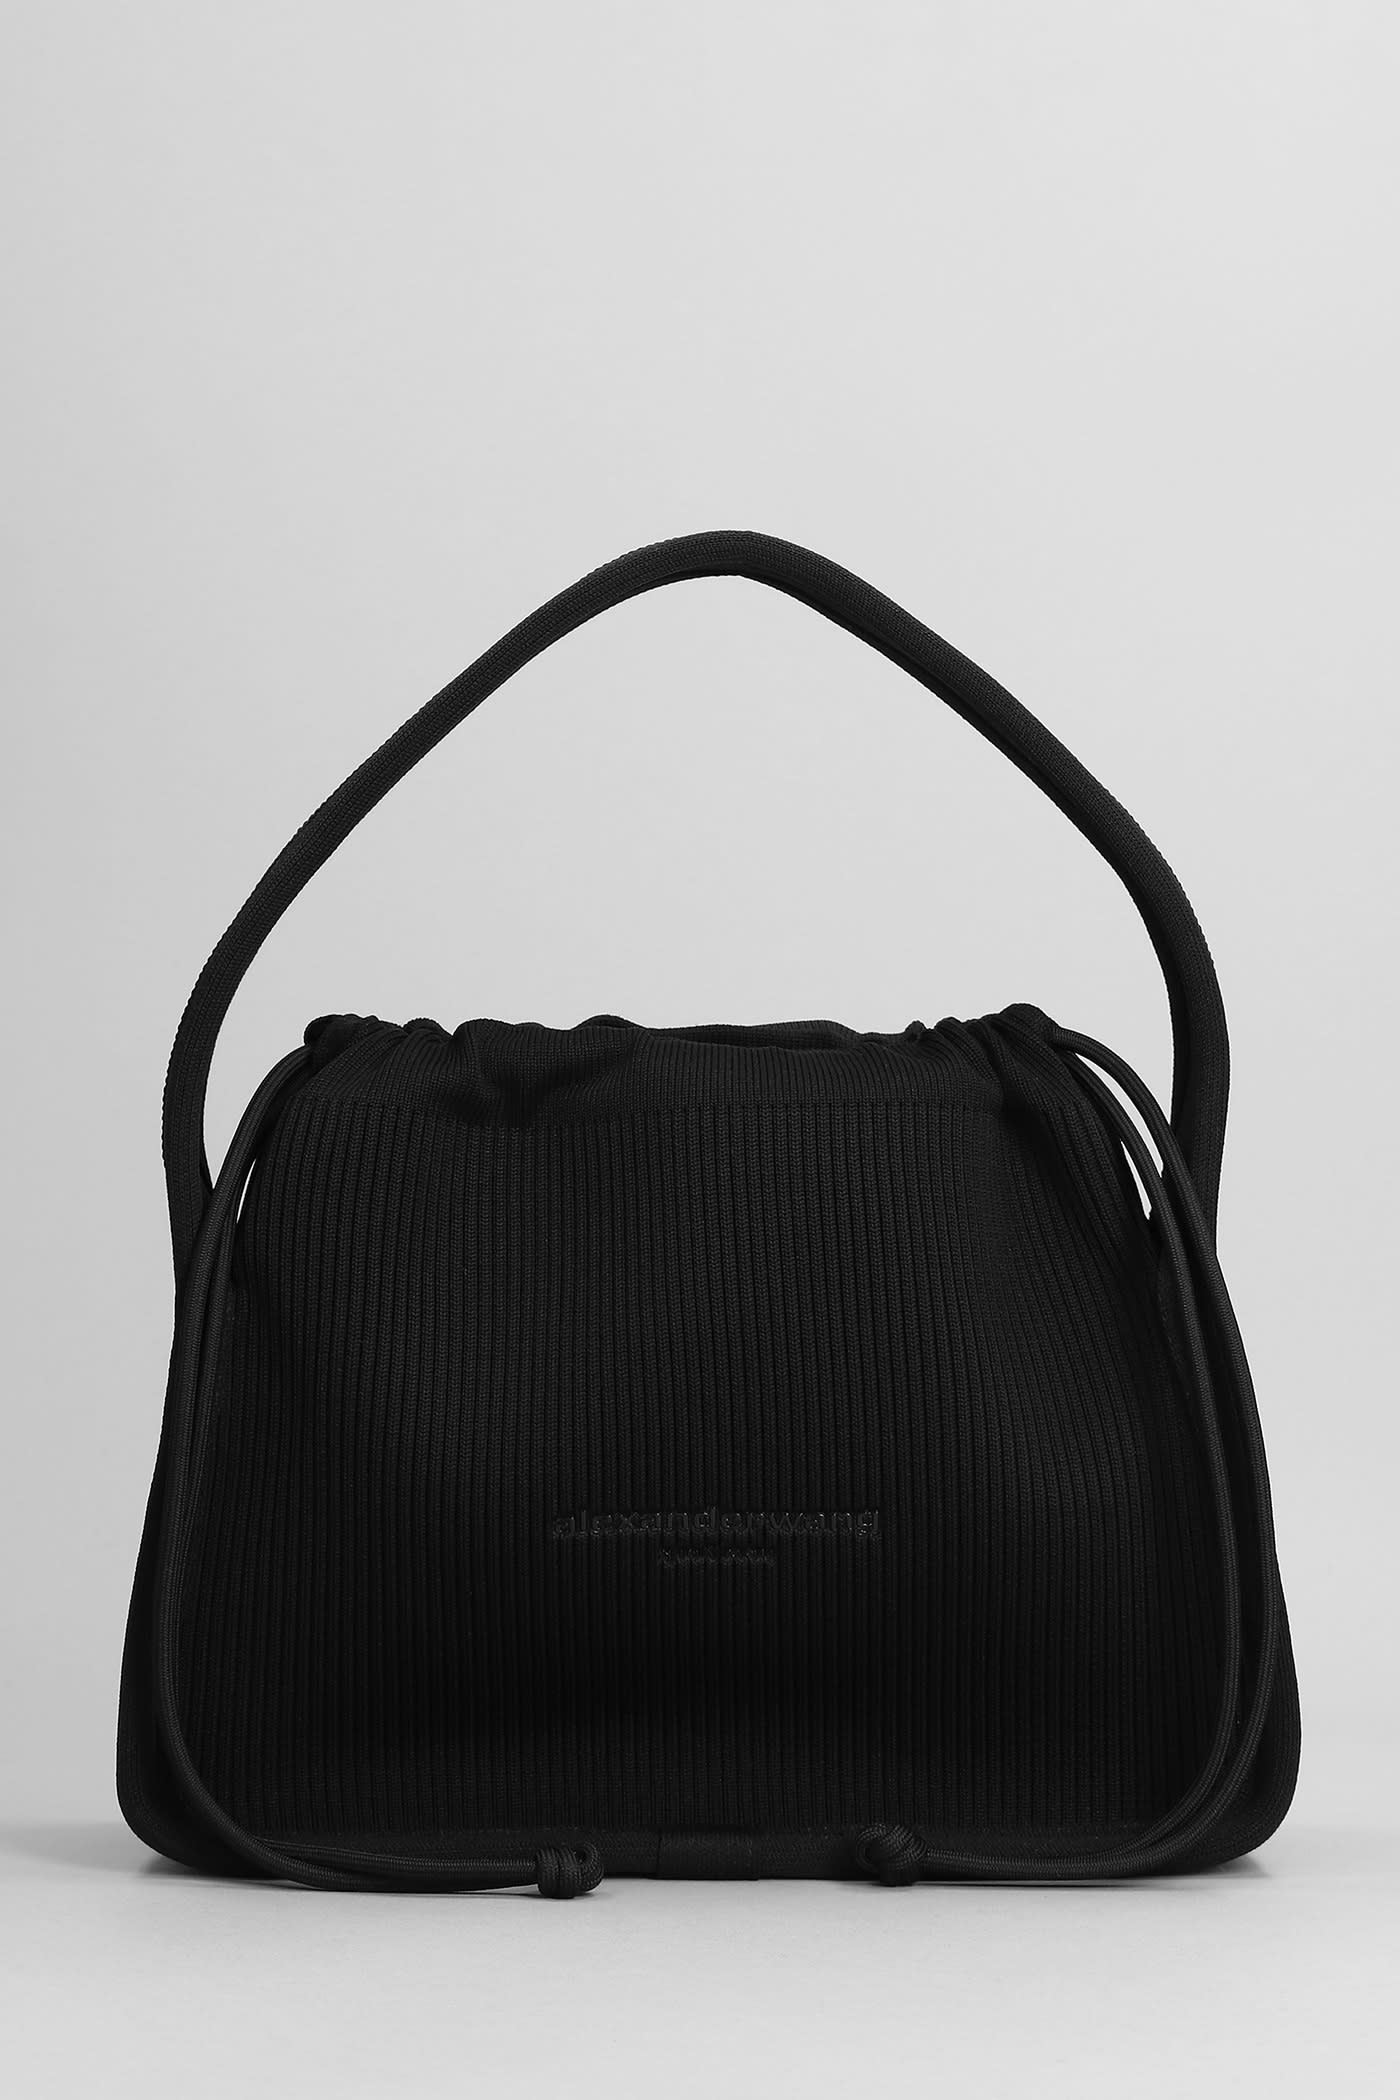 Ryan Hand Bag In Black Polyester